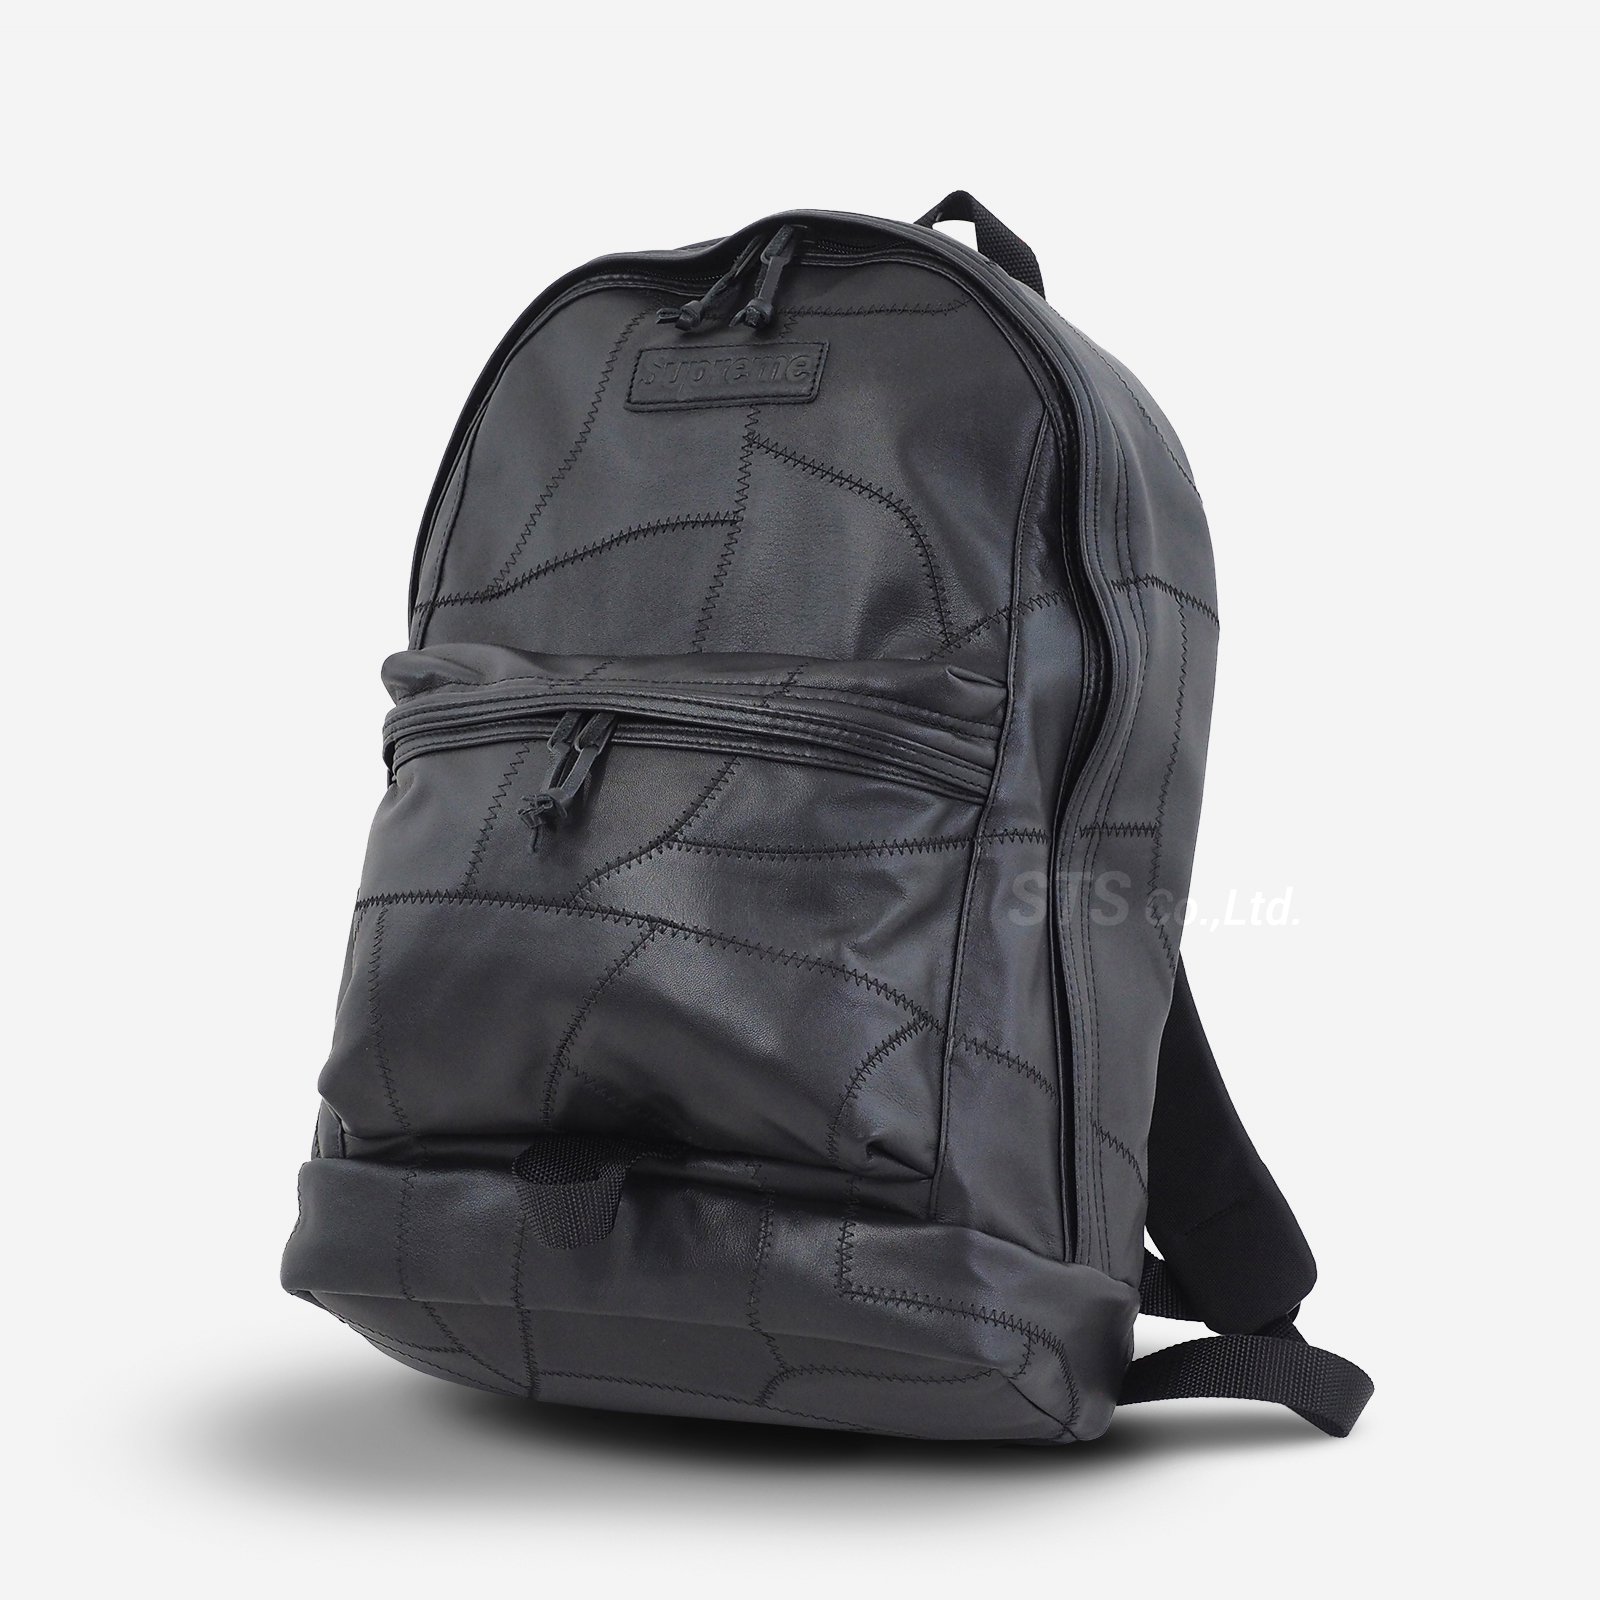 supreme leather backpack シュプリーム